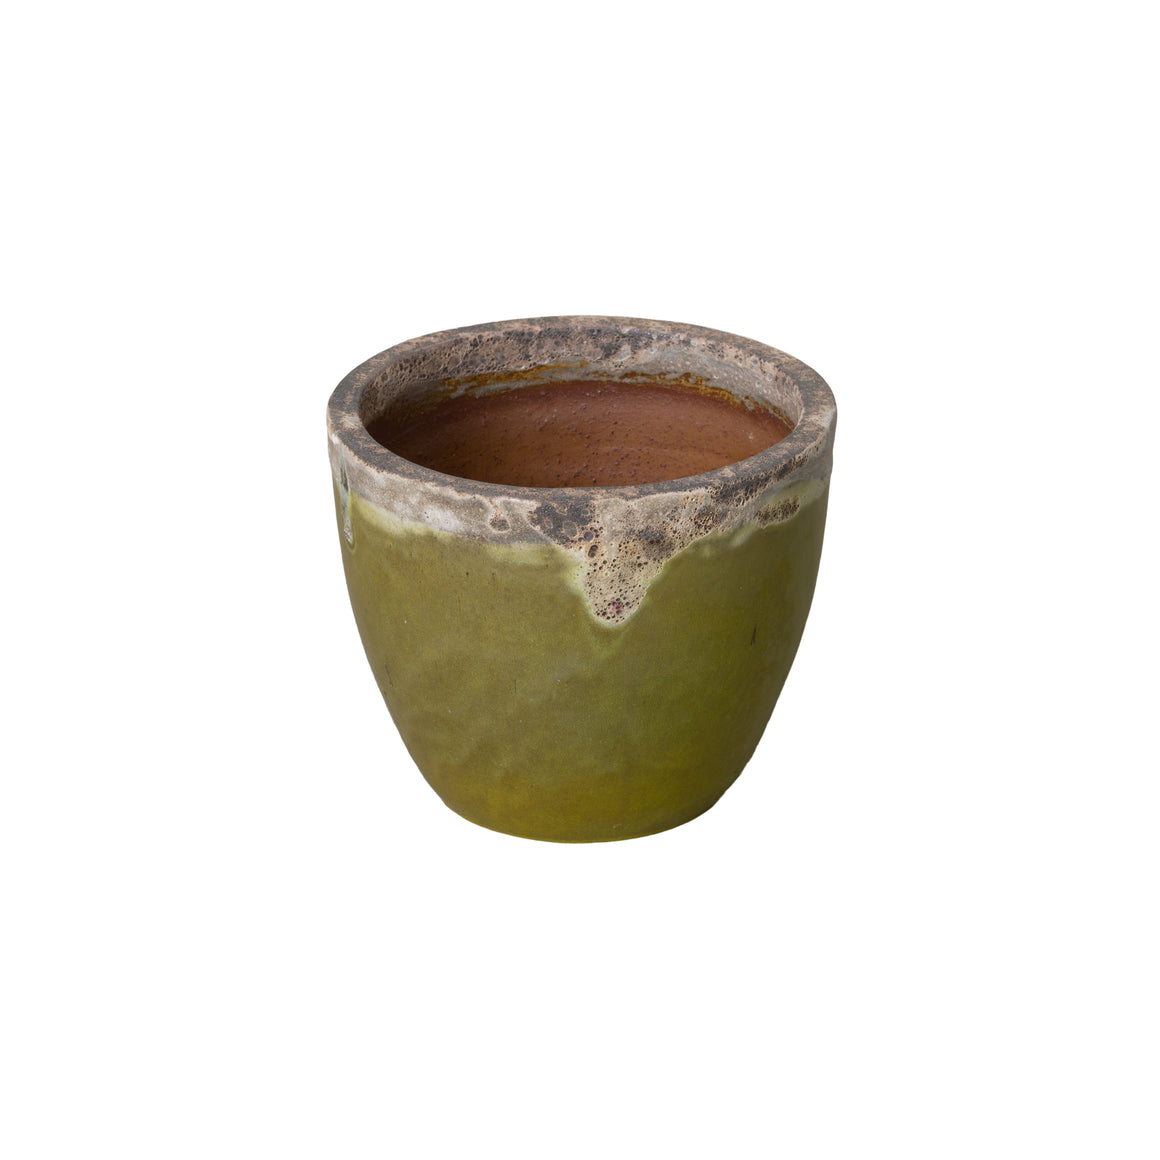 Round Ceramic Planter with a Reef/Lime Glaze